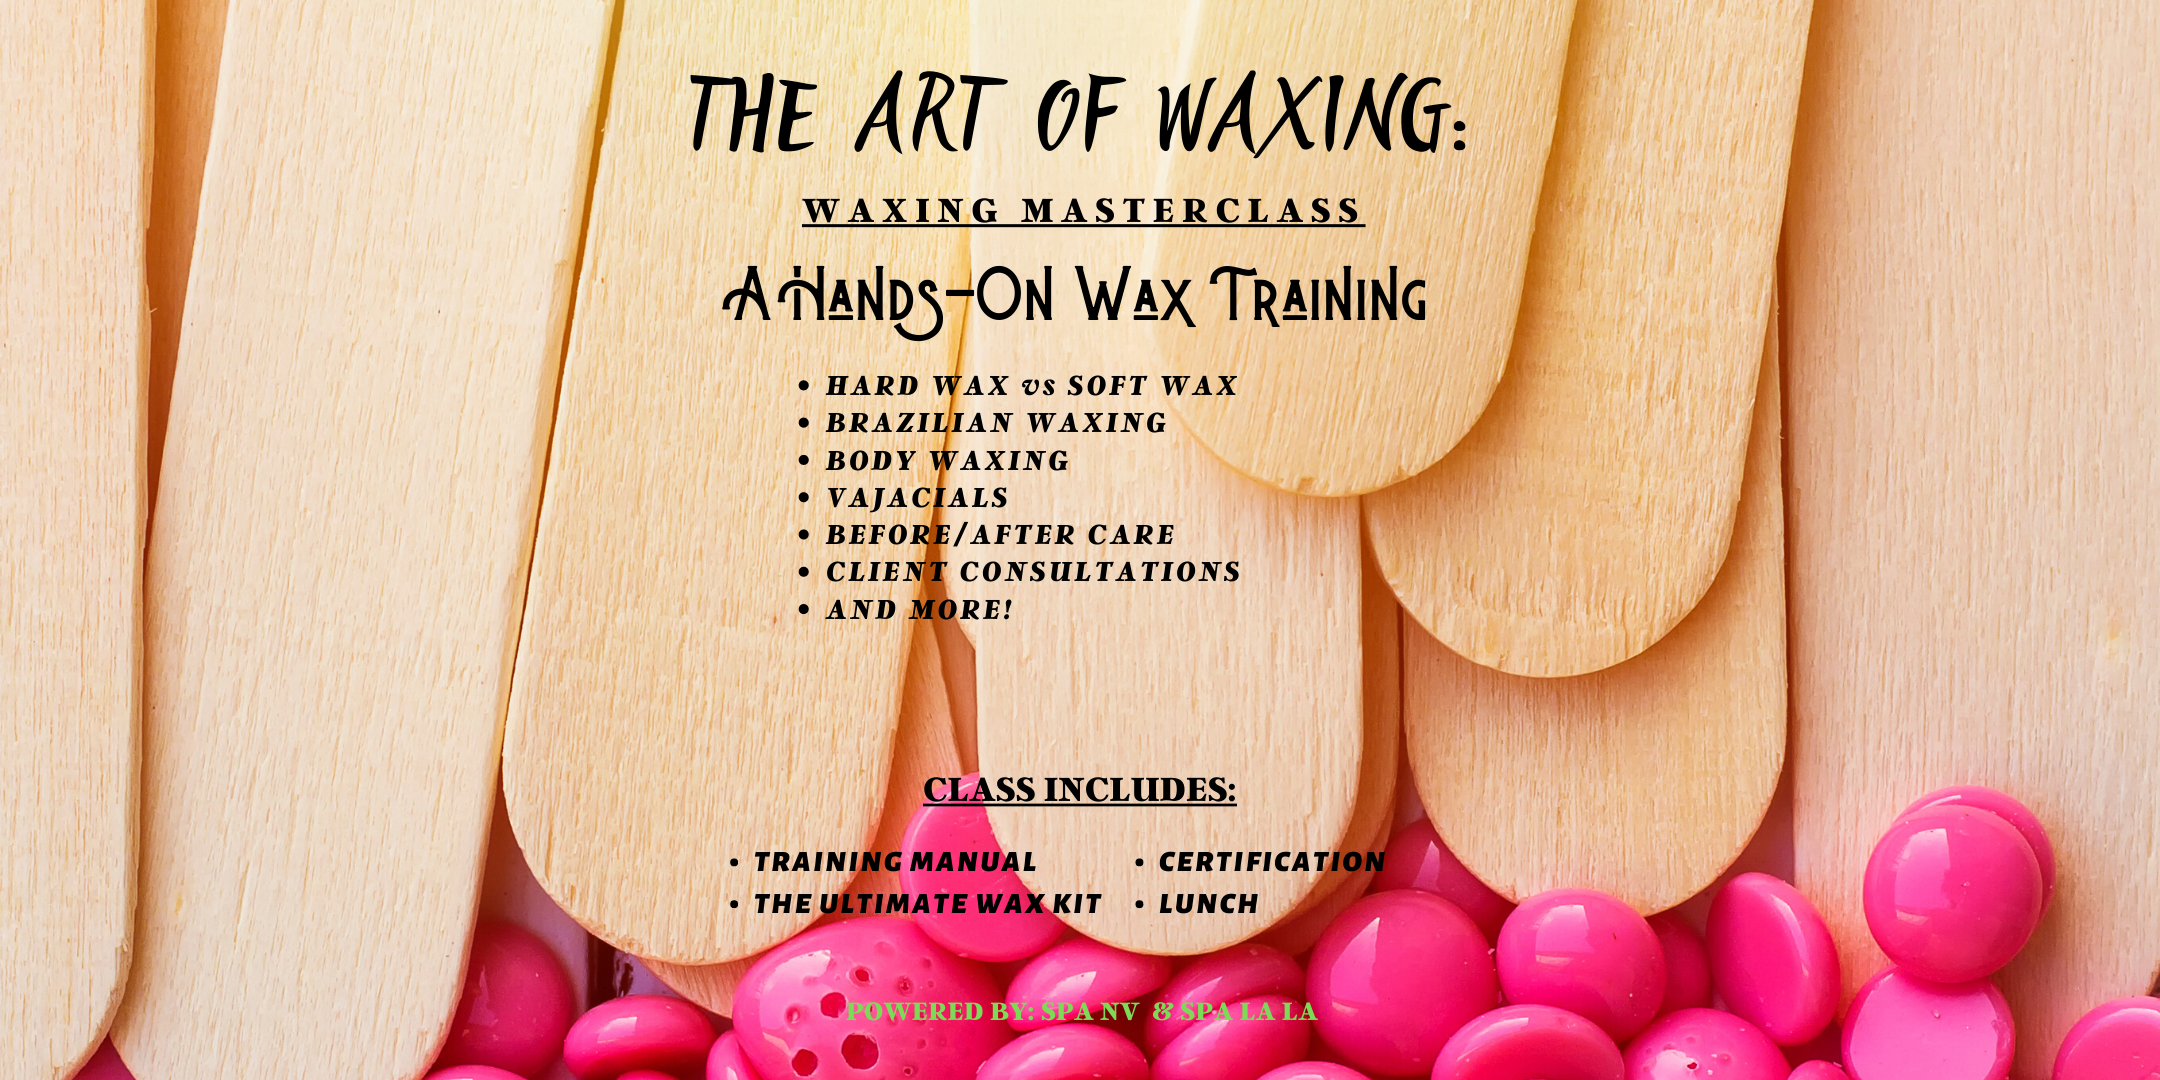 Intimate waxing training manual